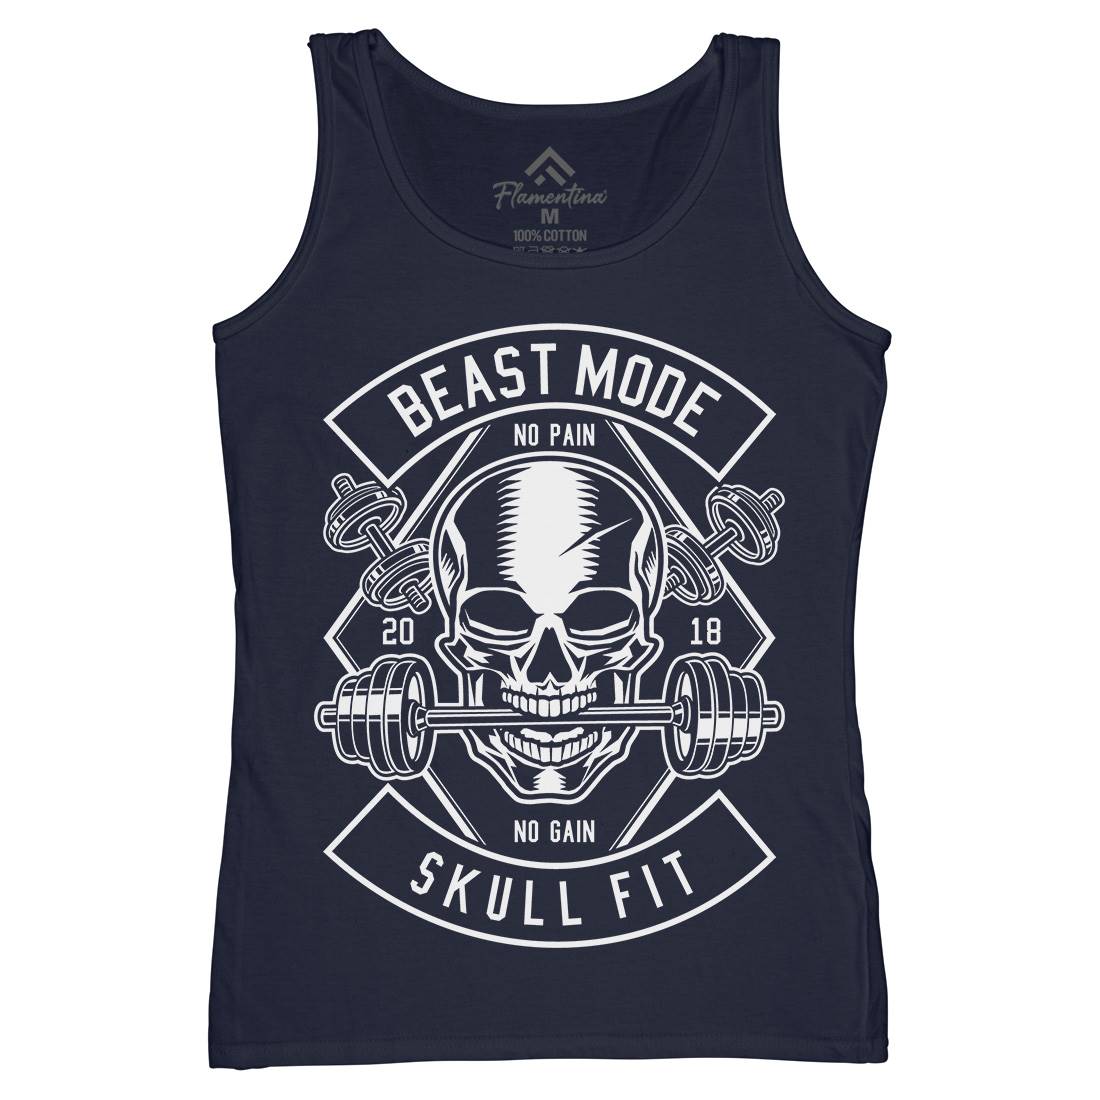 Skull Fit Womens Organic Tank Top Vest Gym B628